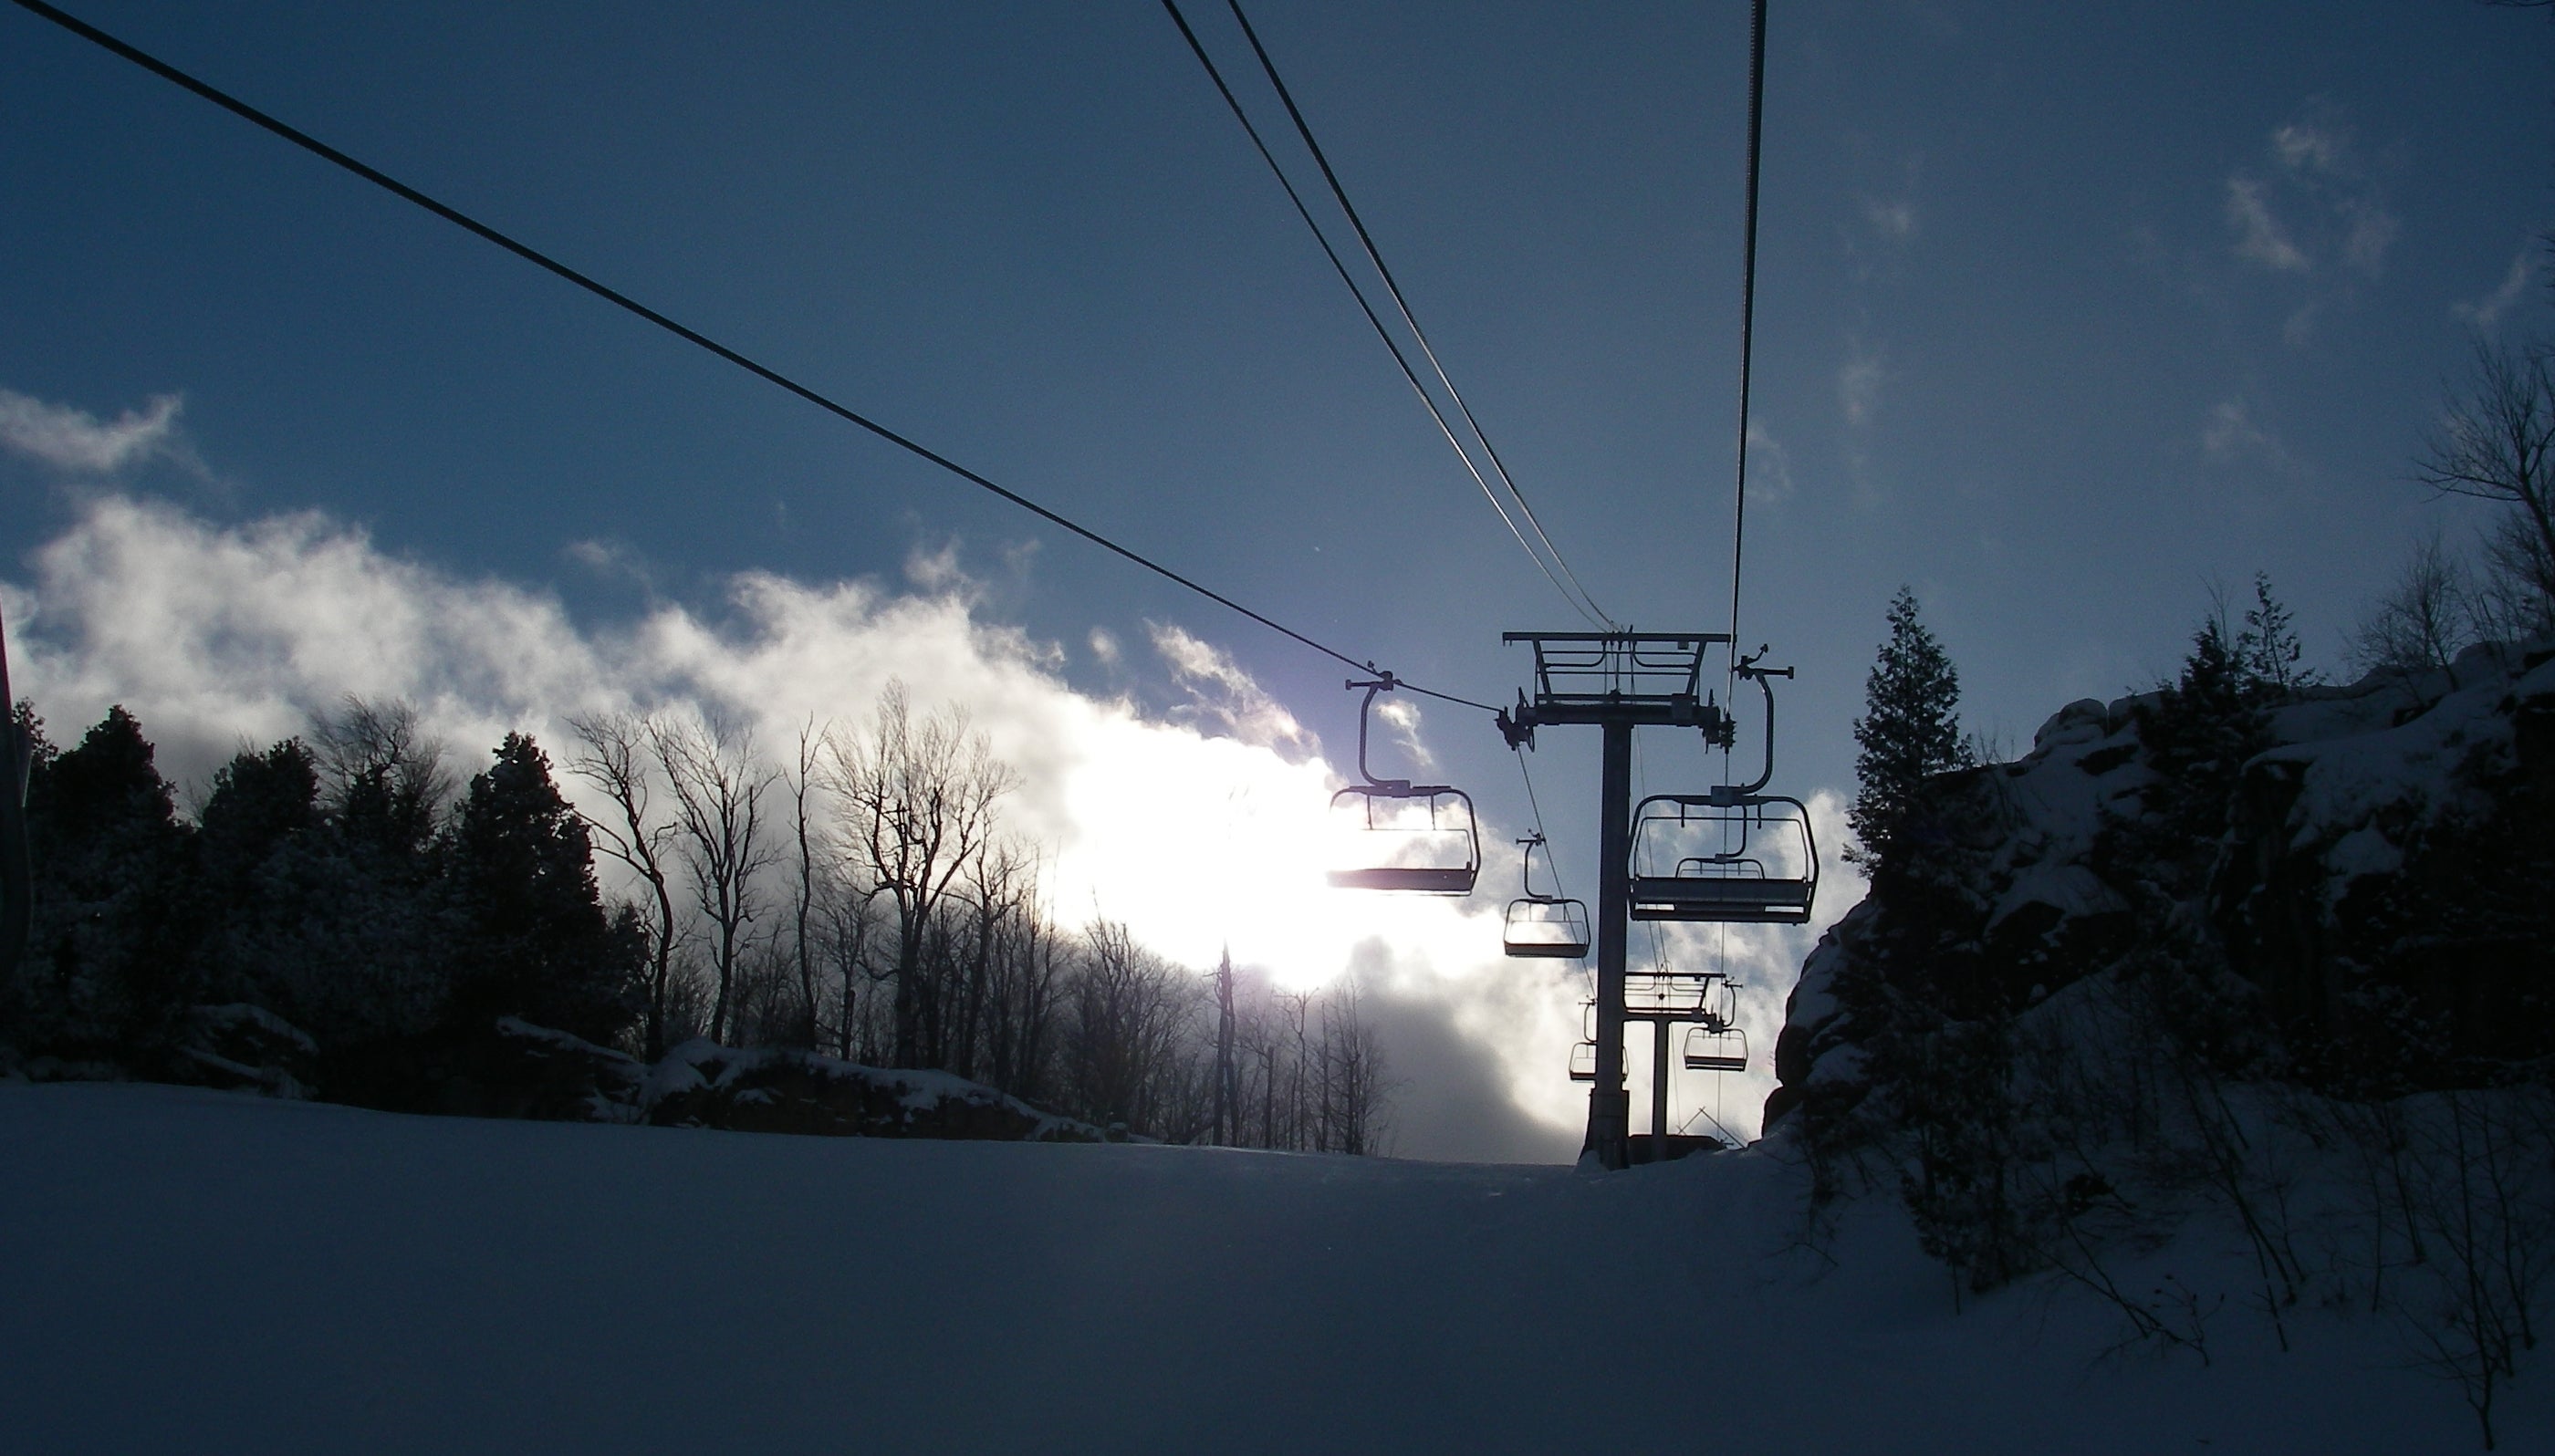 Ski lift in the winter